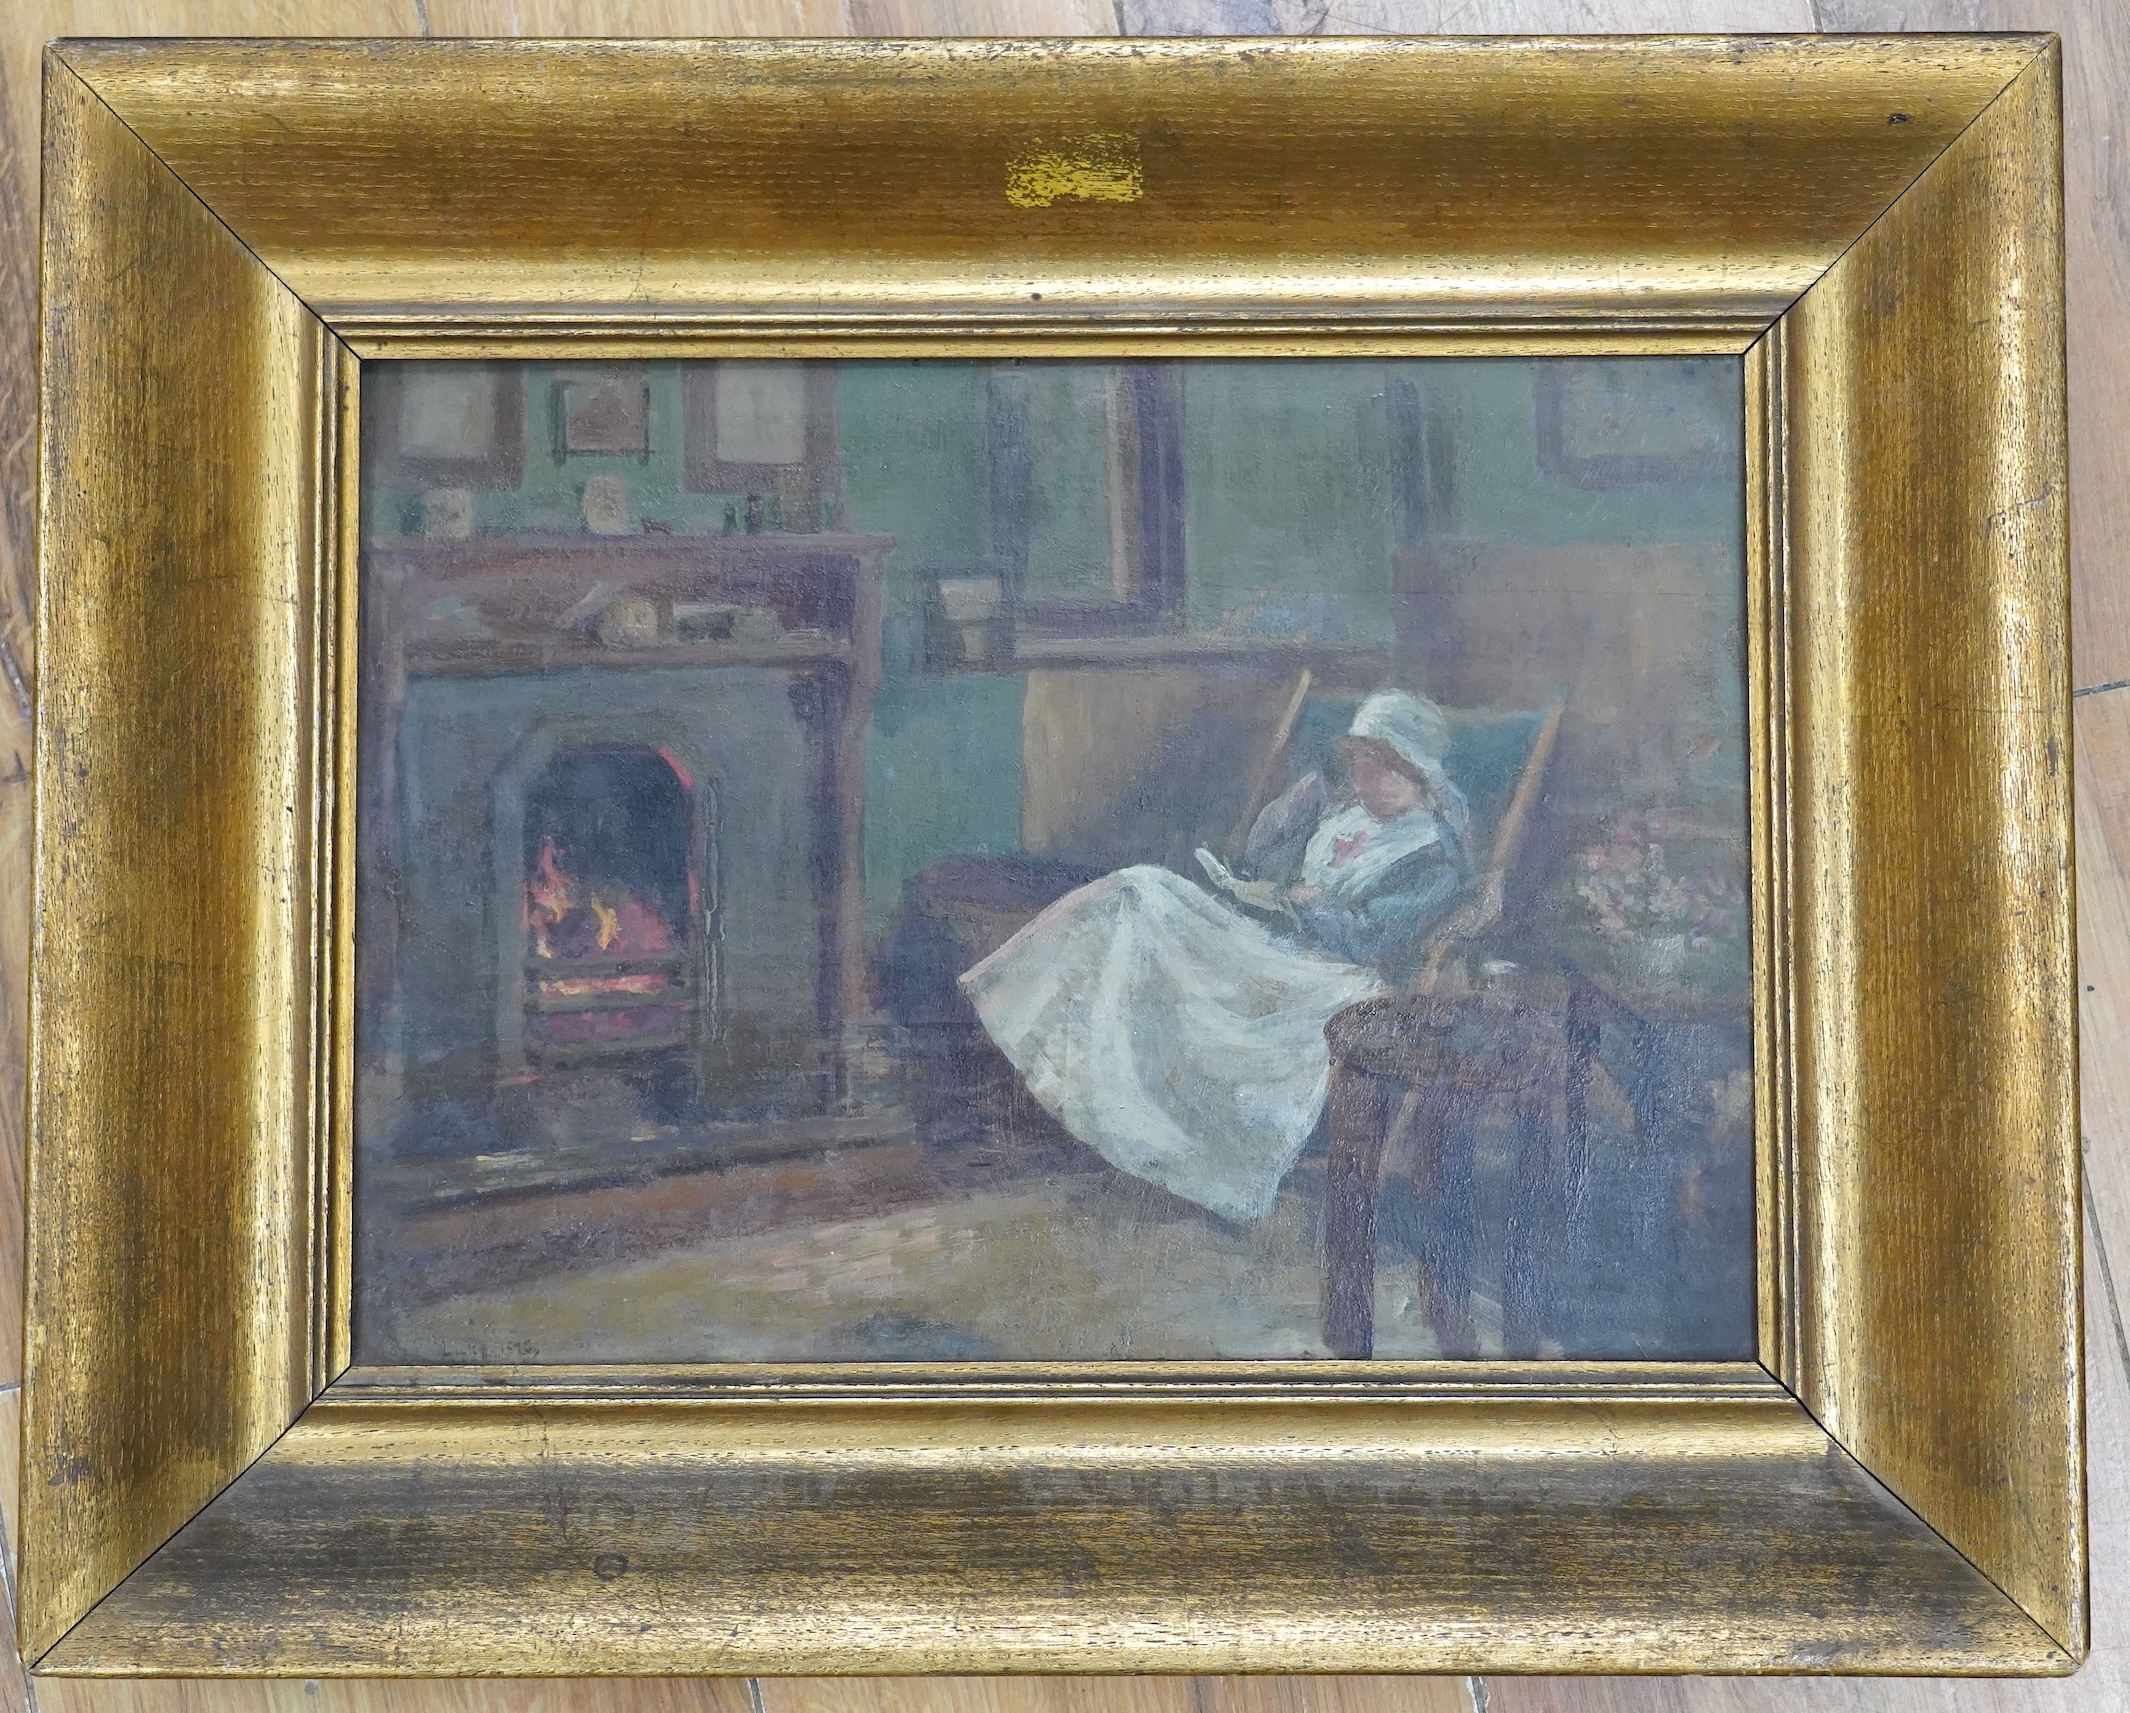 Modern British, oil on board, Nurse in an interior, inscribed ‘To Luke 1926’, 23 x 31cm, gilt framed